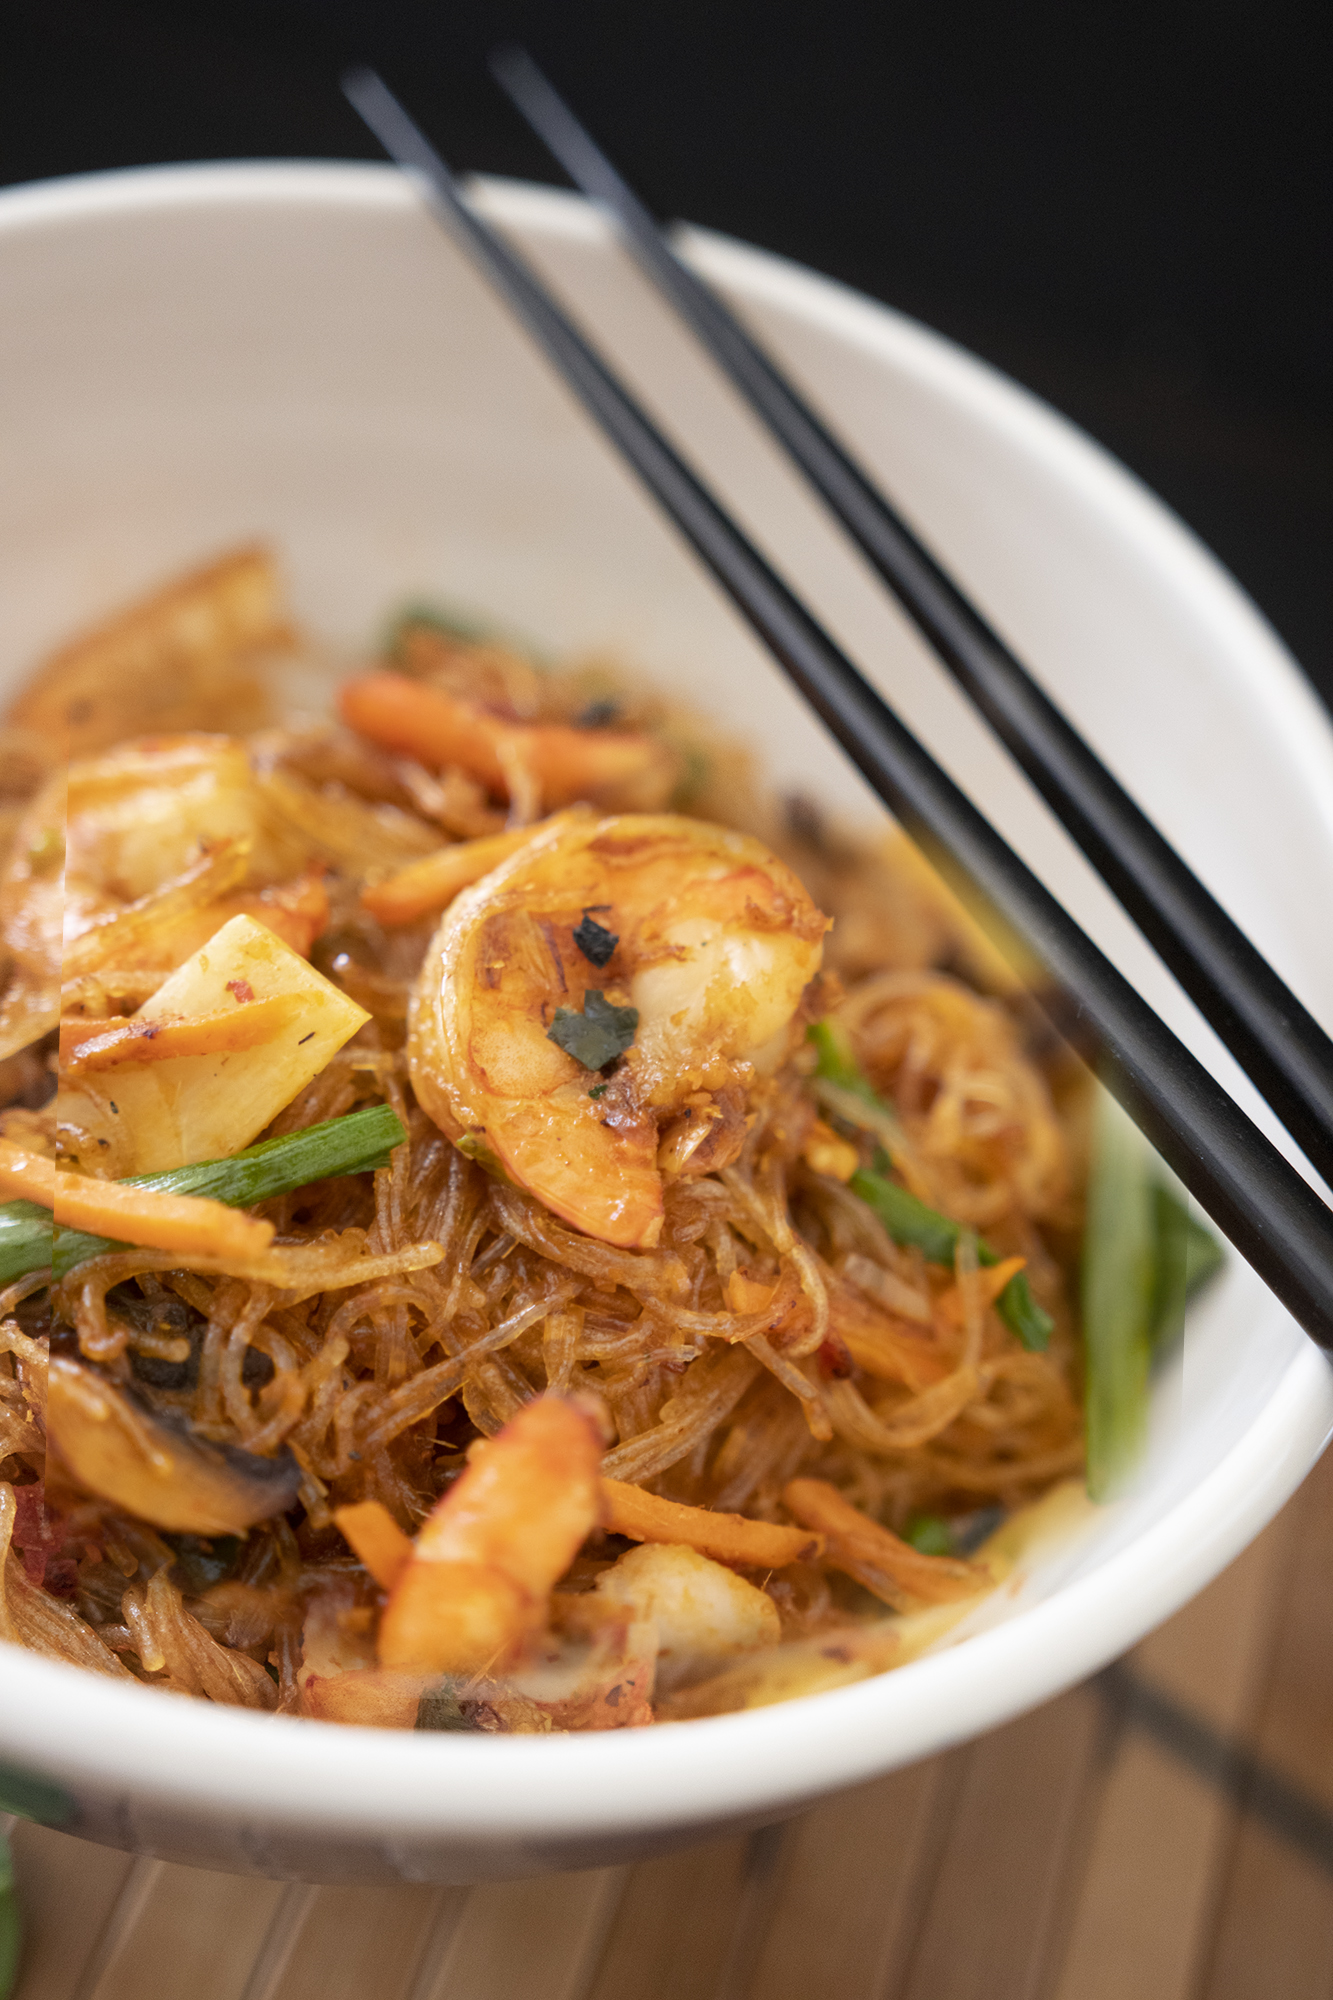 Spicy Shrimp Glass Noodles Kravings Food Adventures,Flies In House Plants